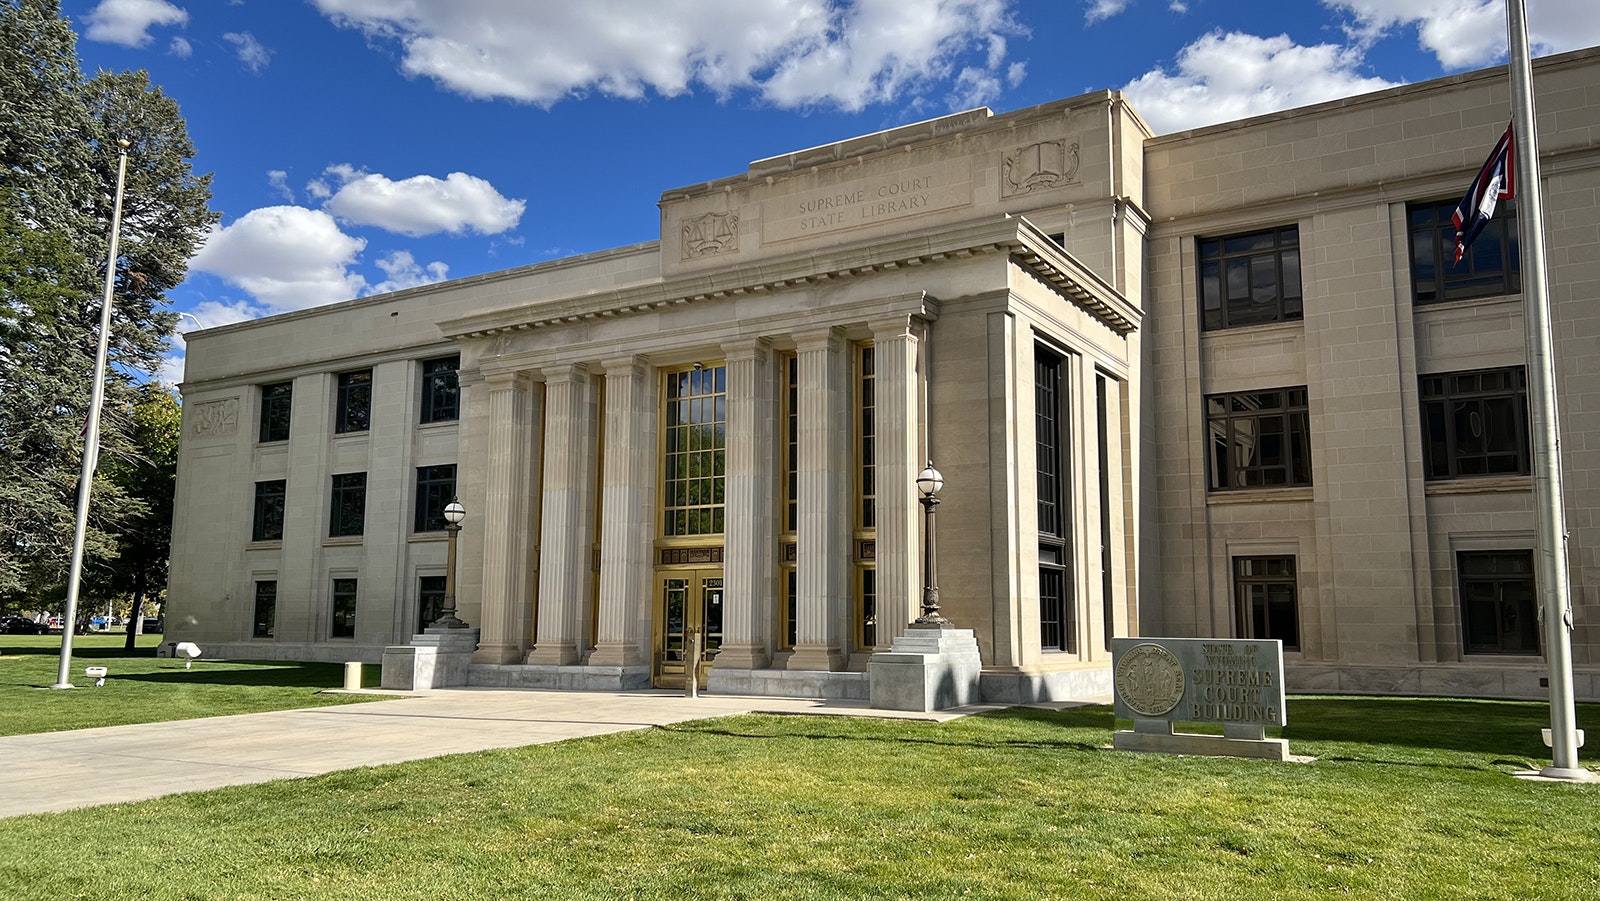 Wyoming Supreme Court building in Cheyenne.